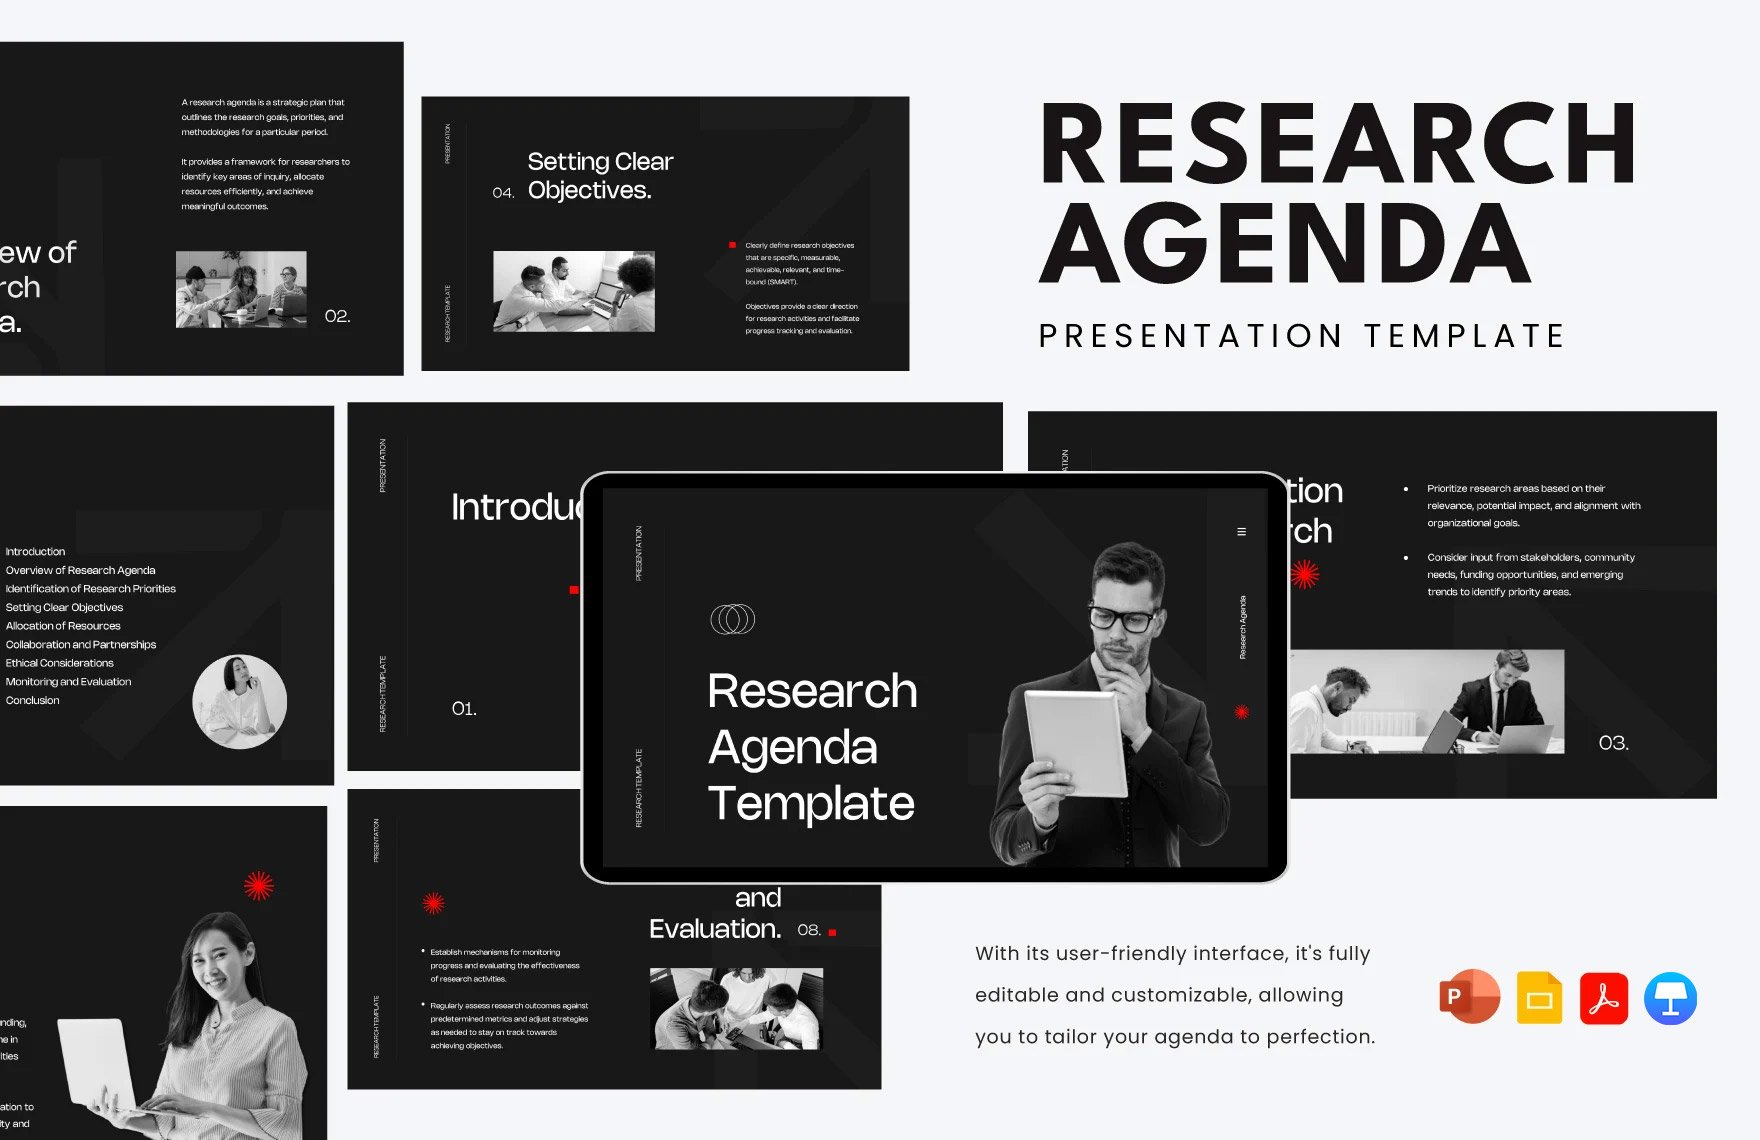 Research Agenda Template